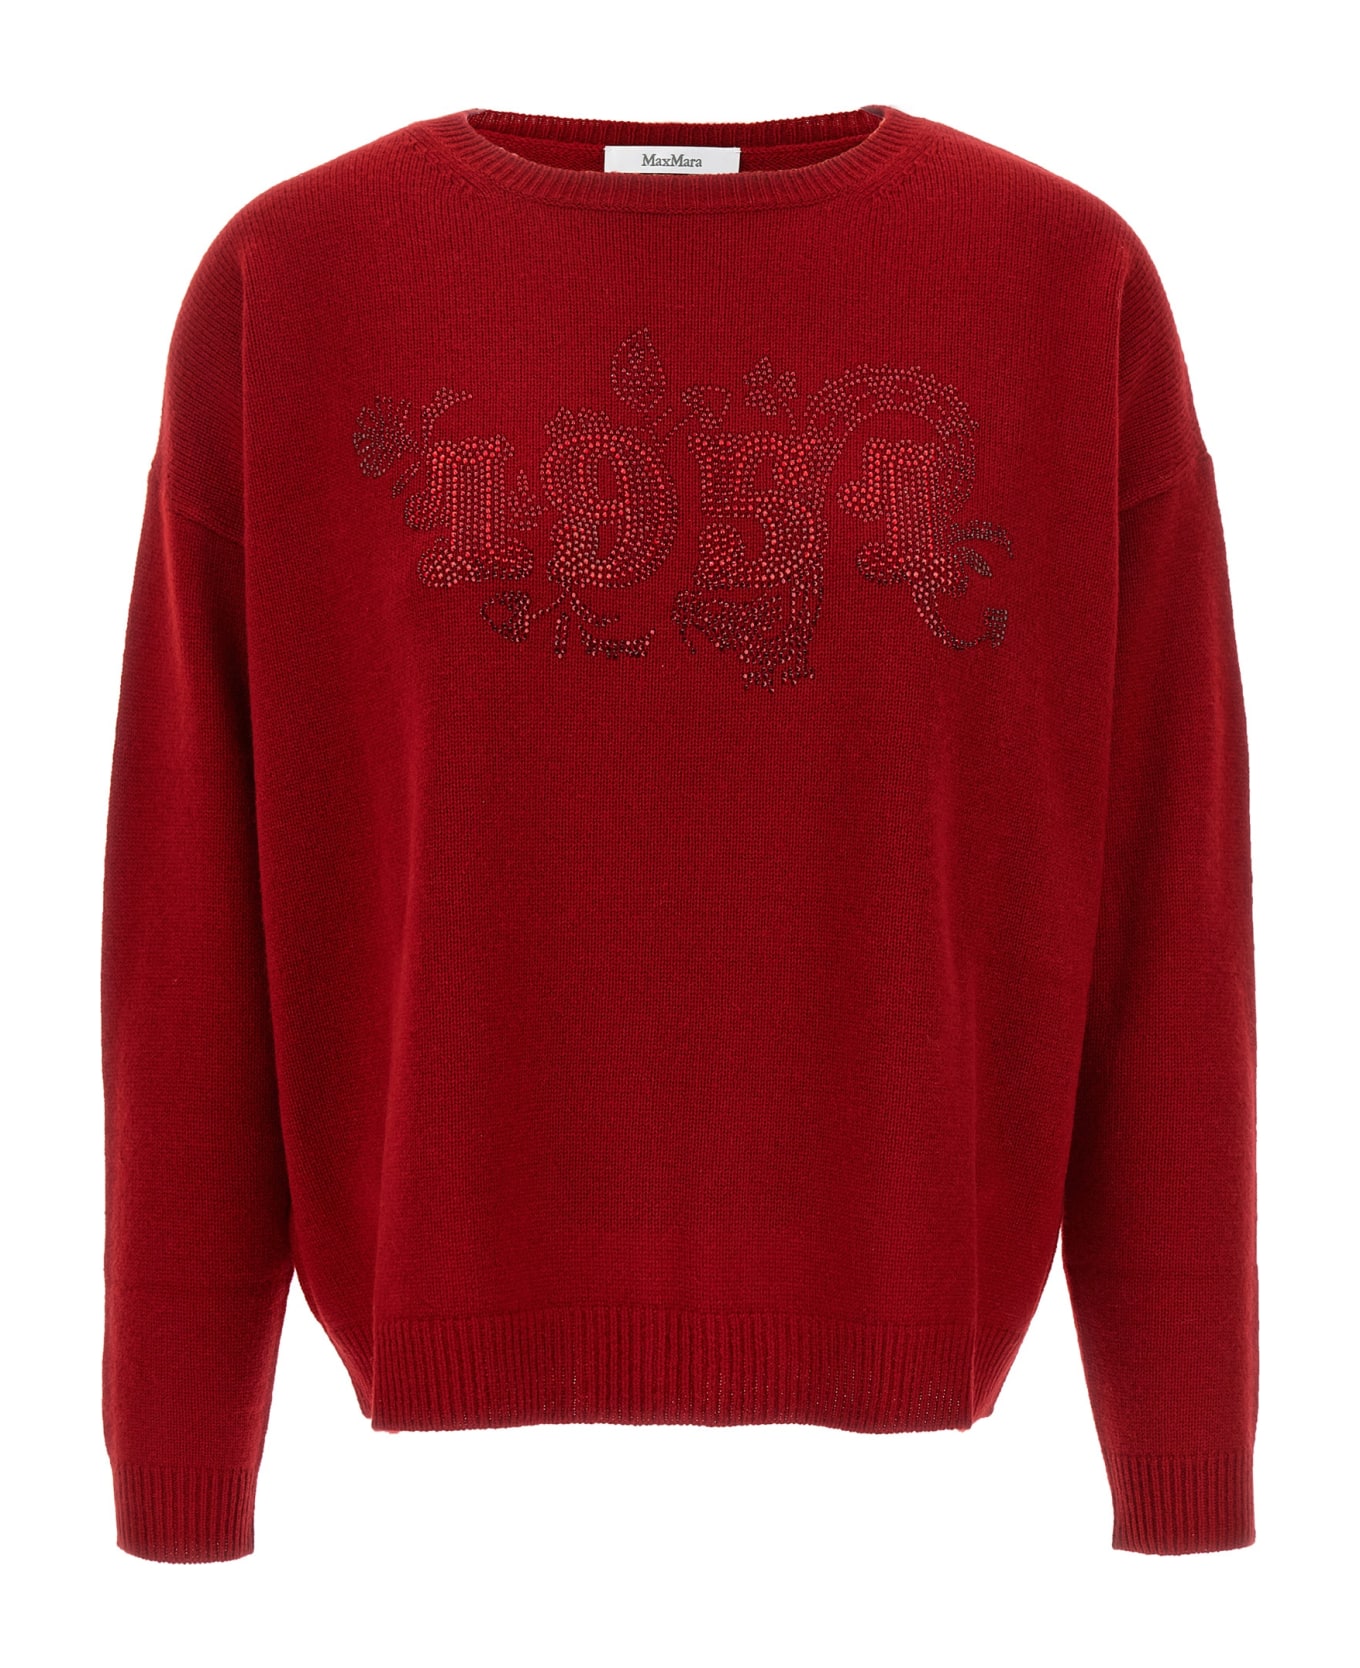 Max Mara 'nias' Sweater - Red